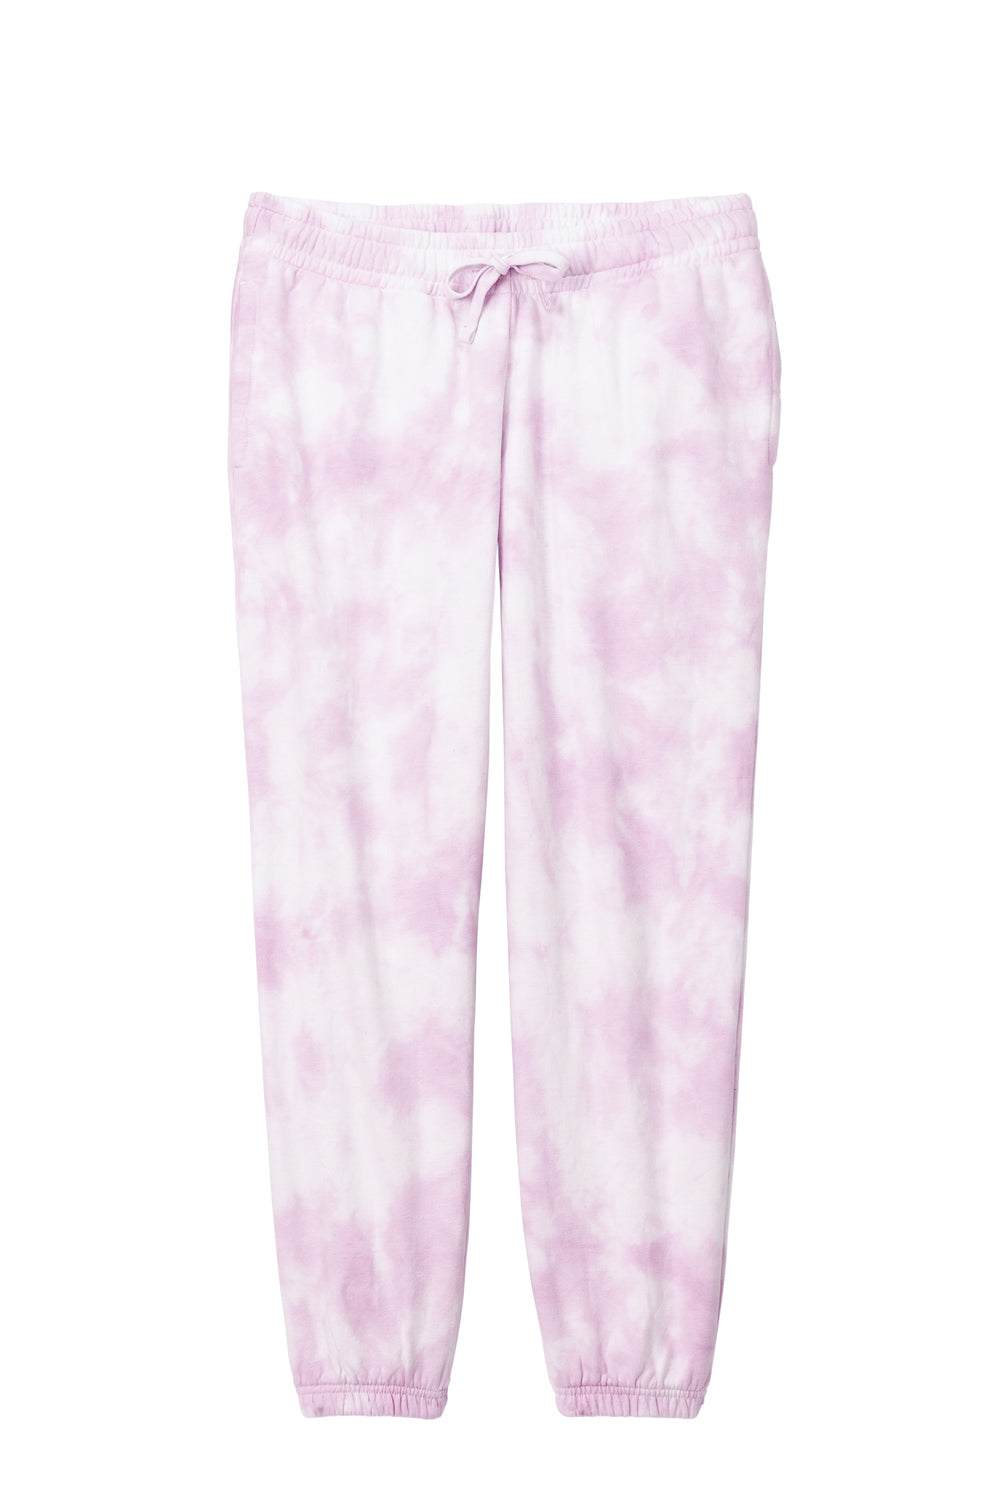 Port & Company Womens Beach Wash Tie Dye Sweatpants w/ Pockets Cerise Pink Flat Front